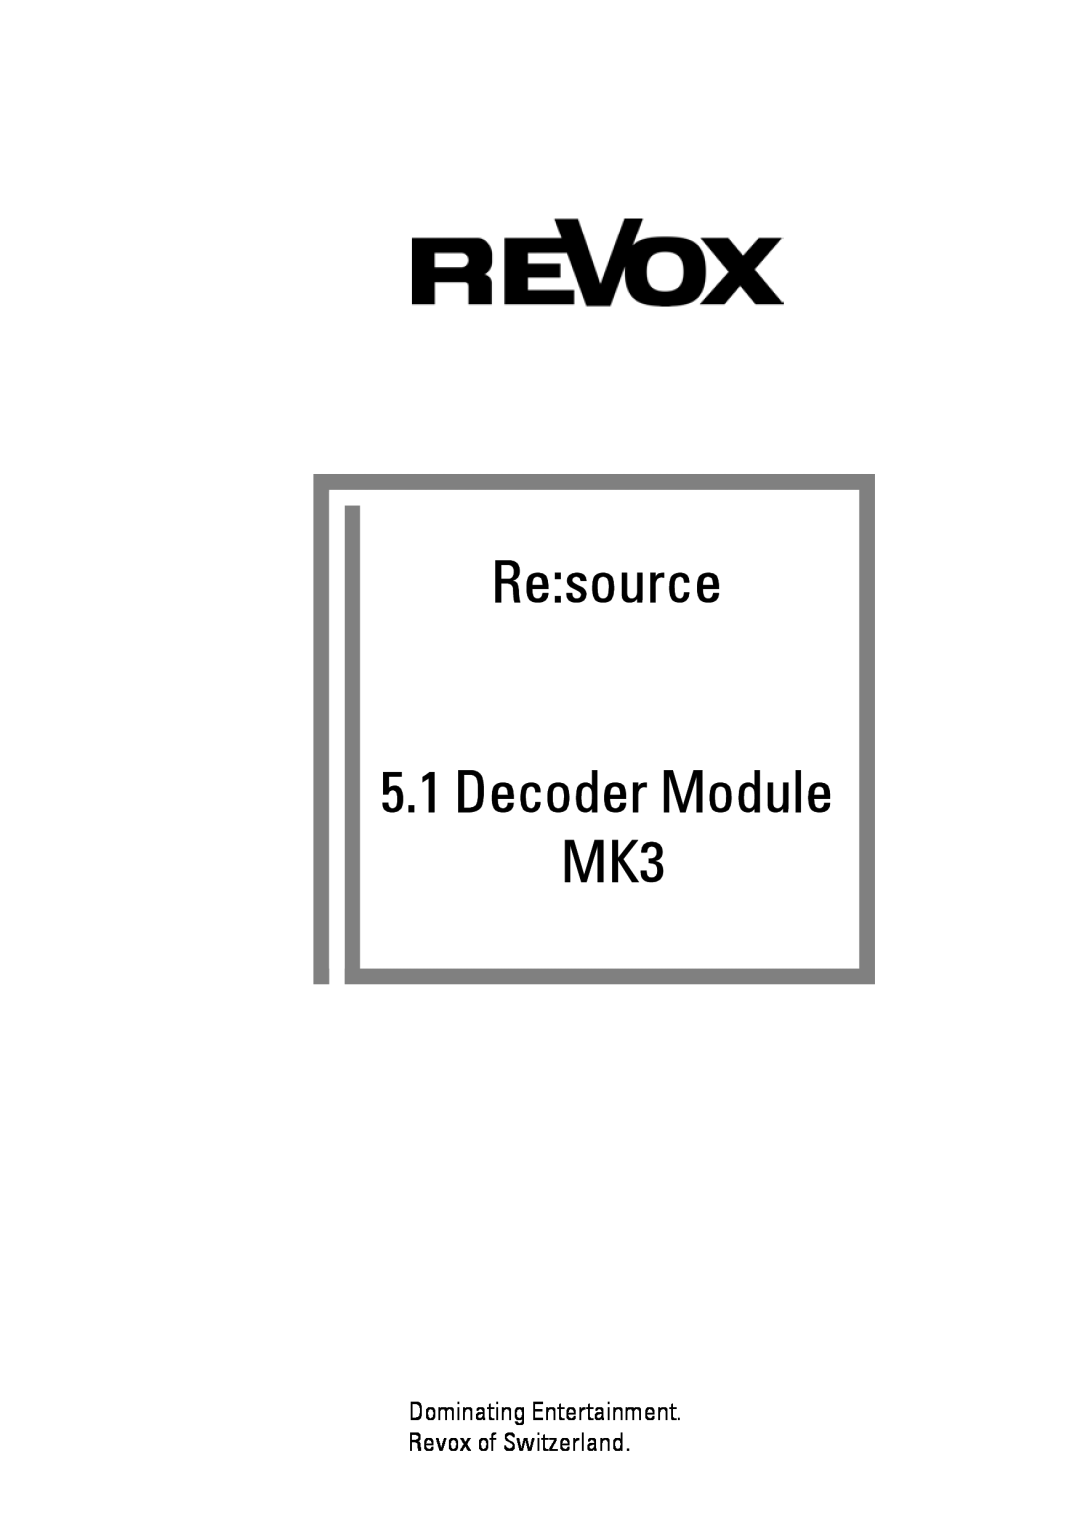 Revox manual Resource, Decoder Module MK3 